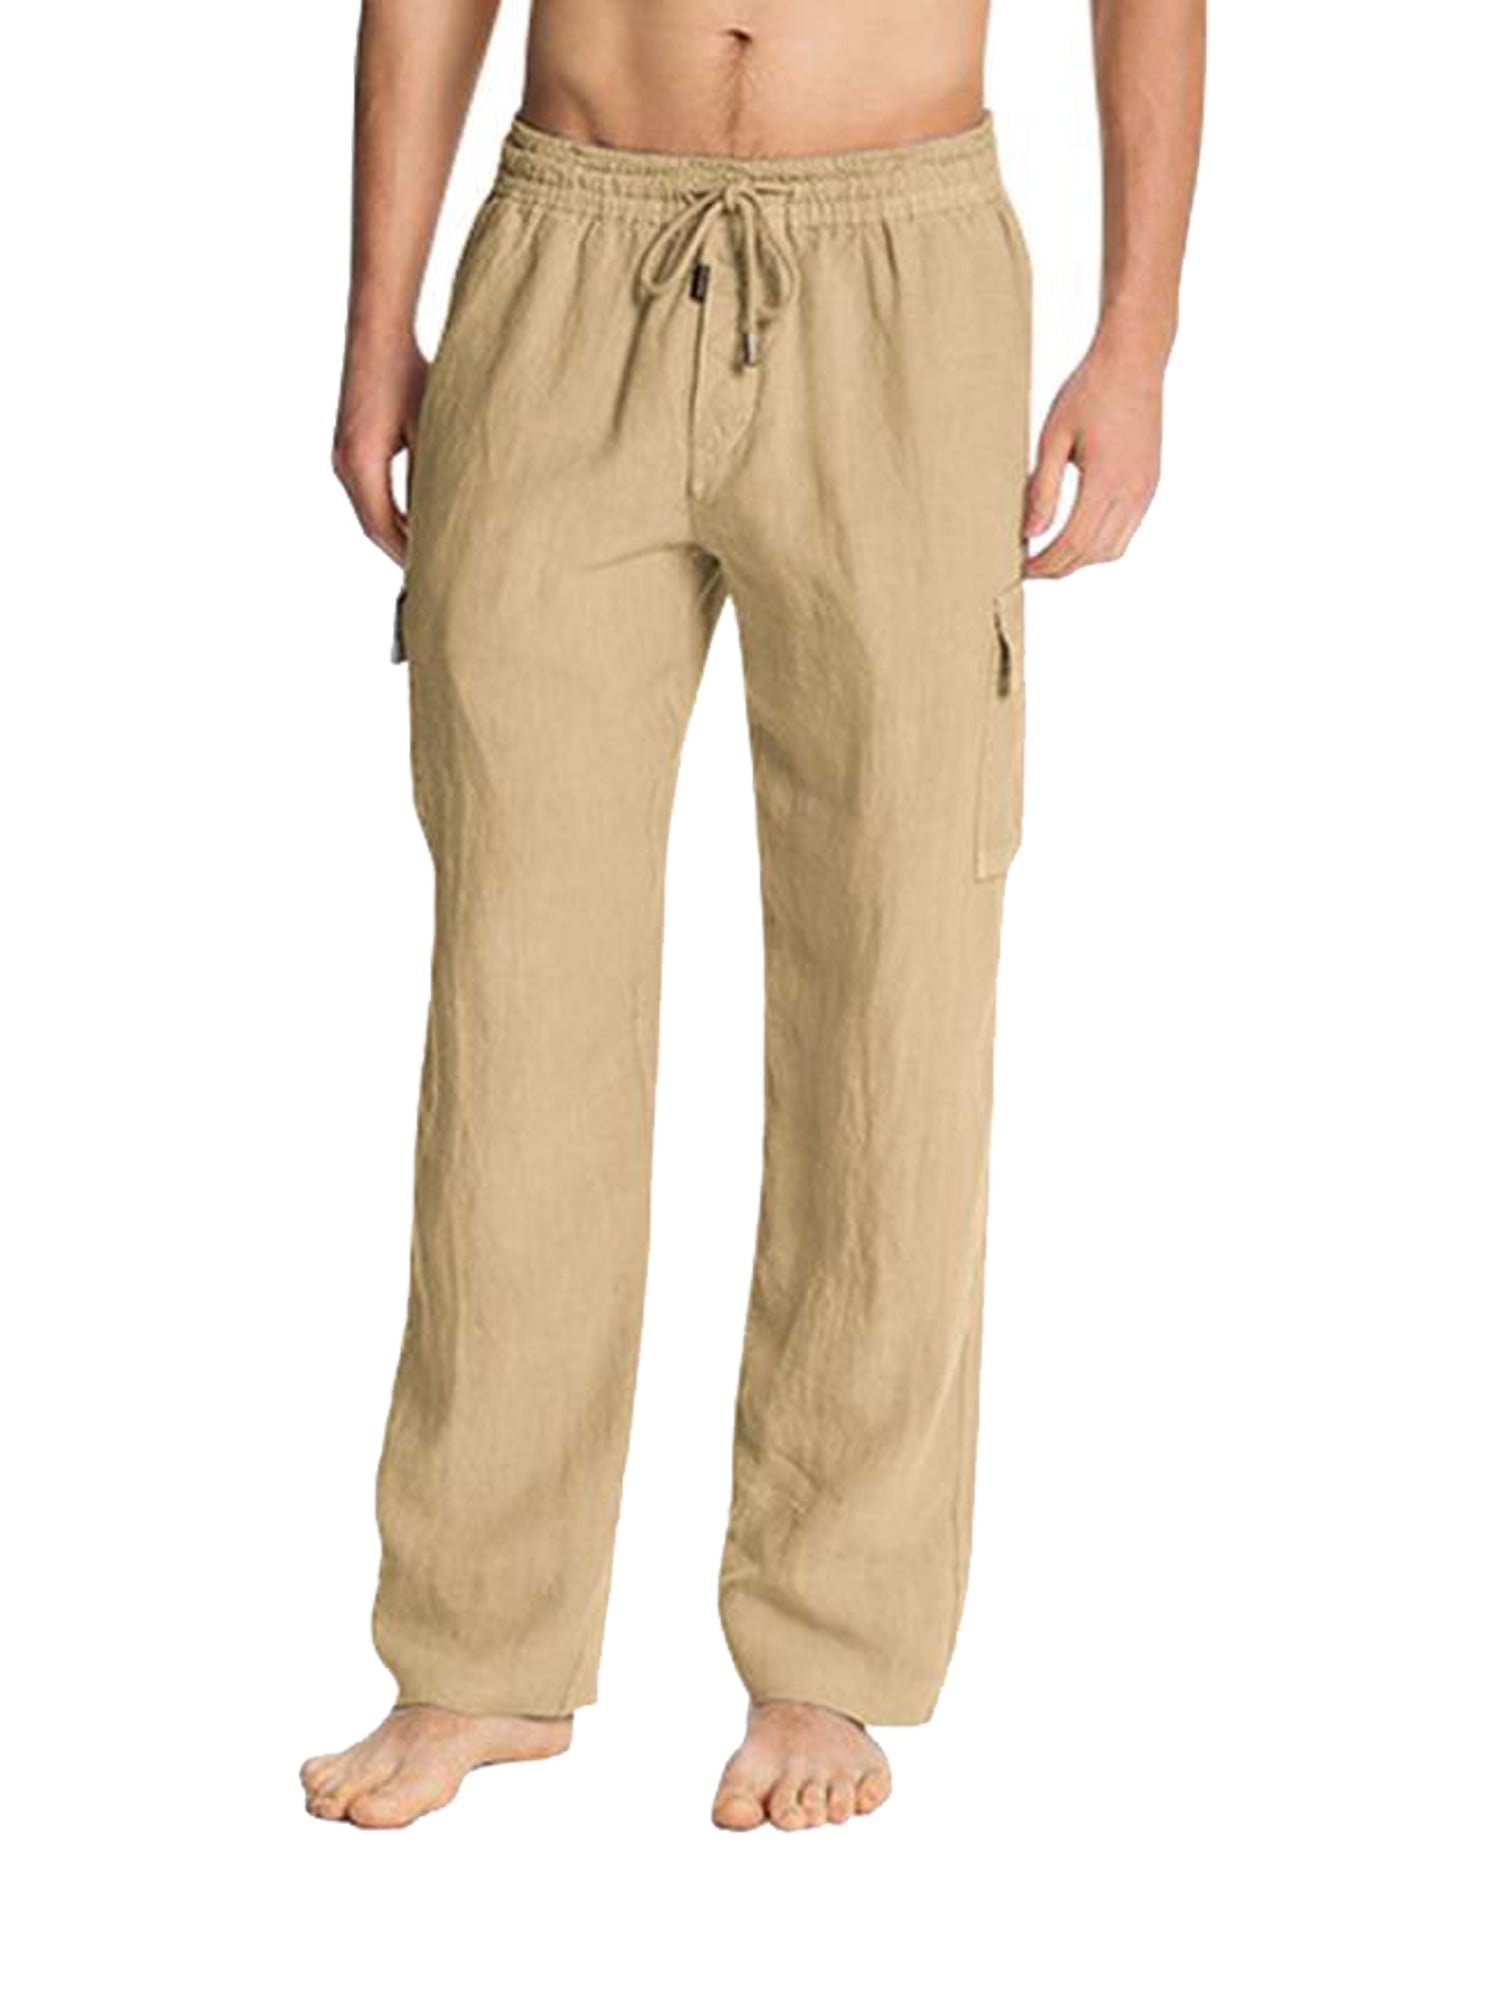 Mens Capri Shorts Men Plus Size Solid Color Cotton Linen Straight Relaxed Fit Pants Casual Comfy Drawstring Trouser 